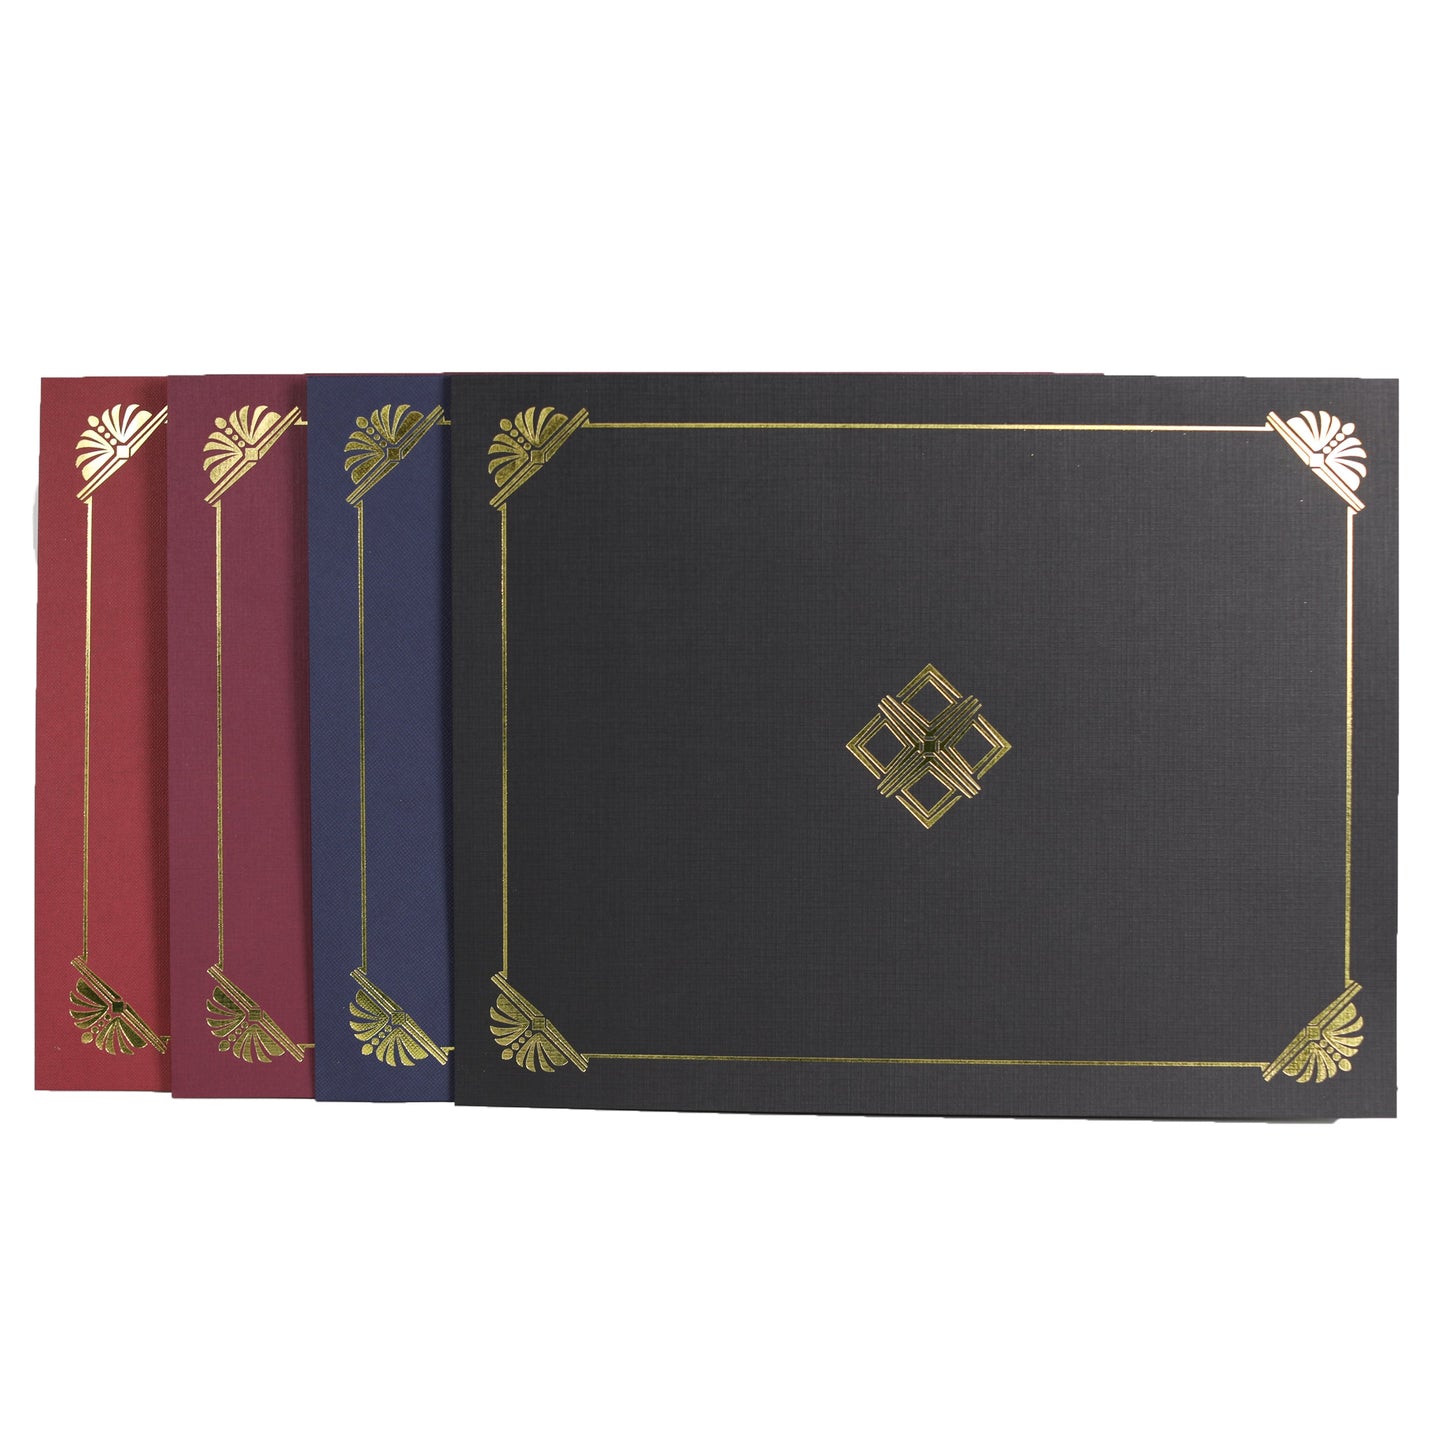 St. James® Certificate Holders/Document Covers/Diploma Holders, Burgundy, Gold Foil, Linen Finish, Pack of 5